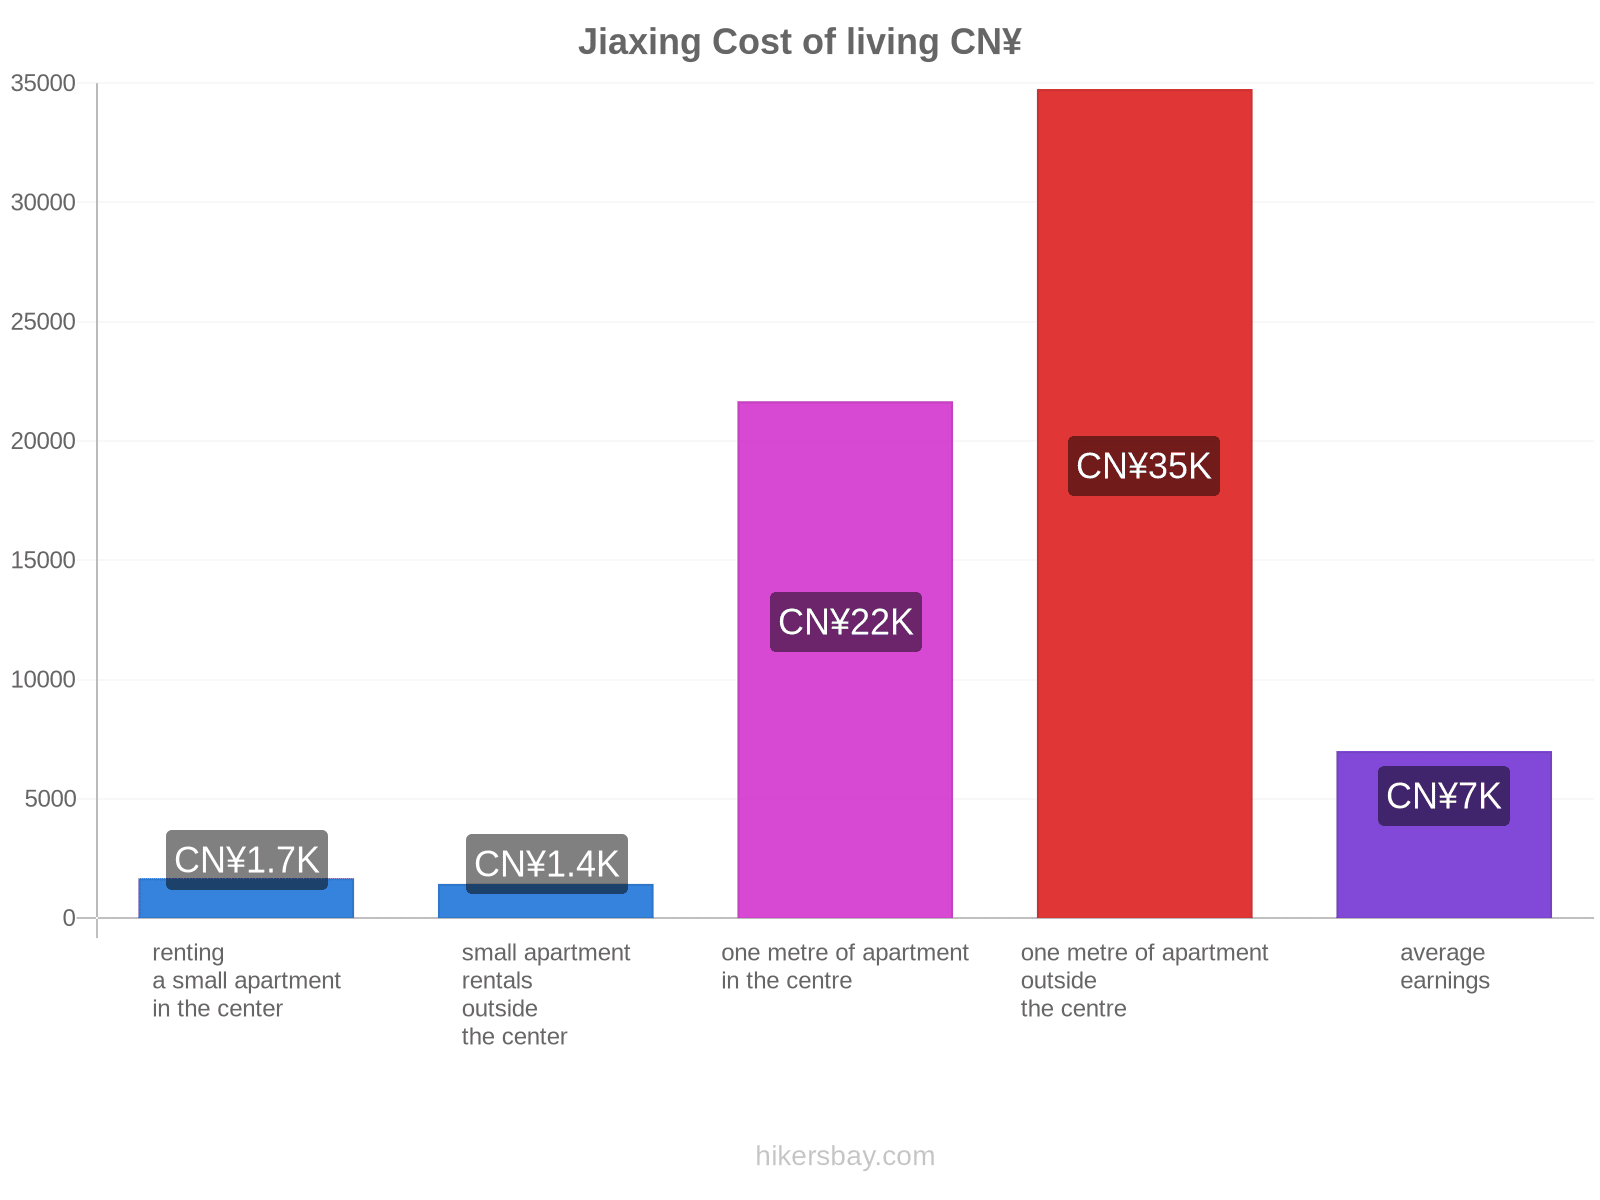 Jiaxing cost of living hikersbay.com